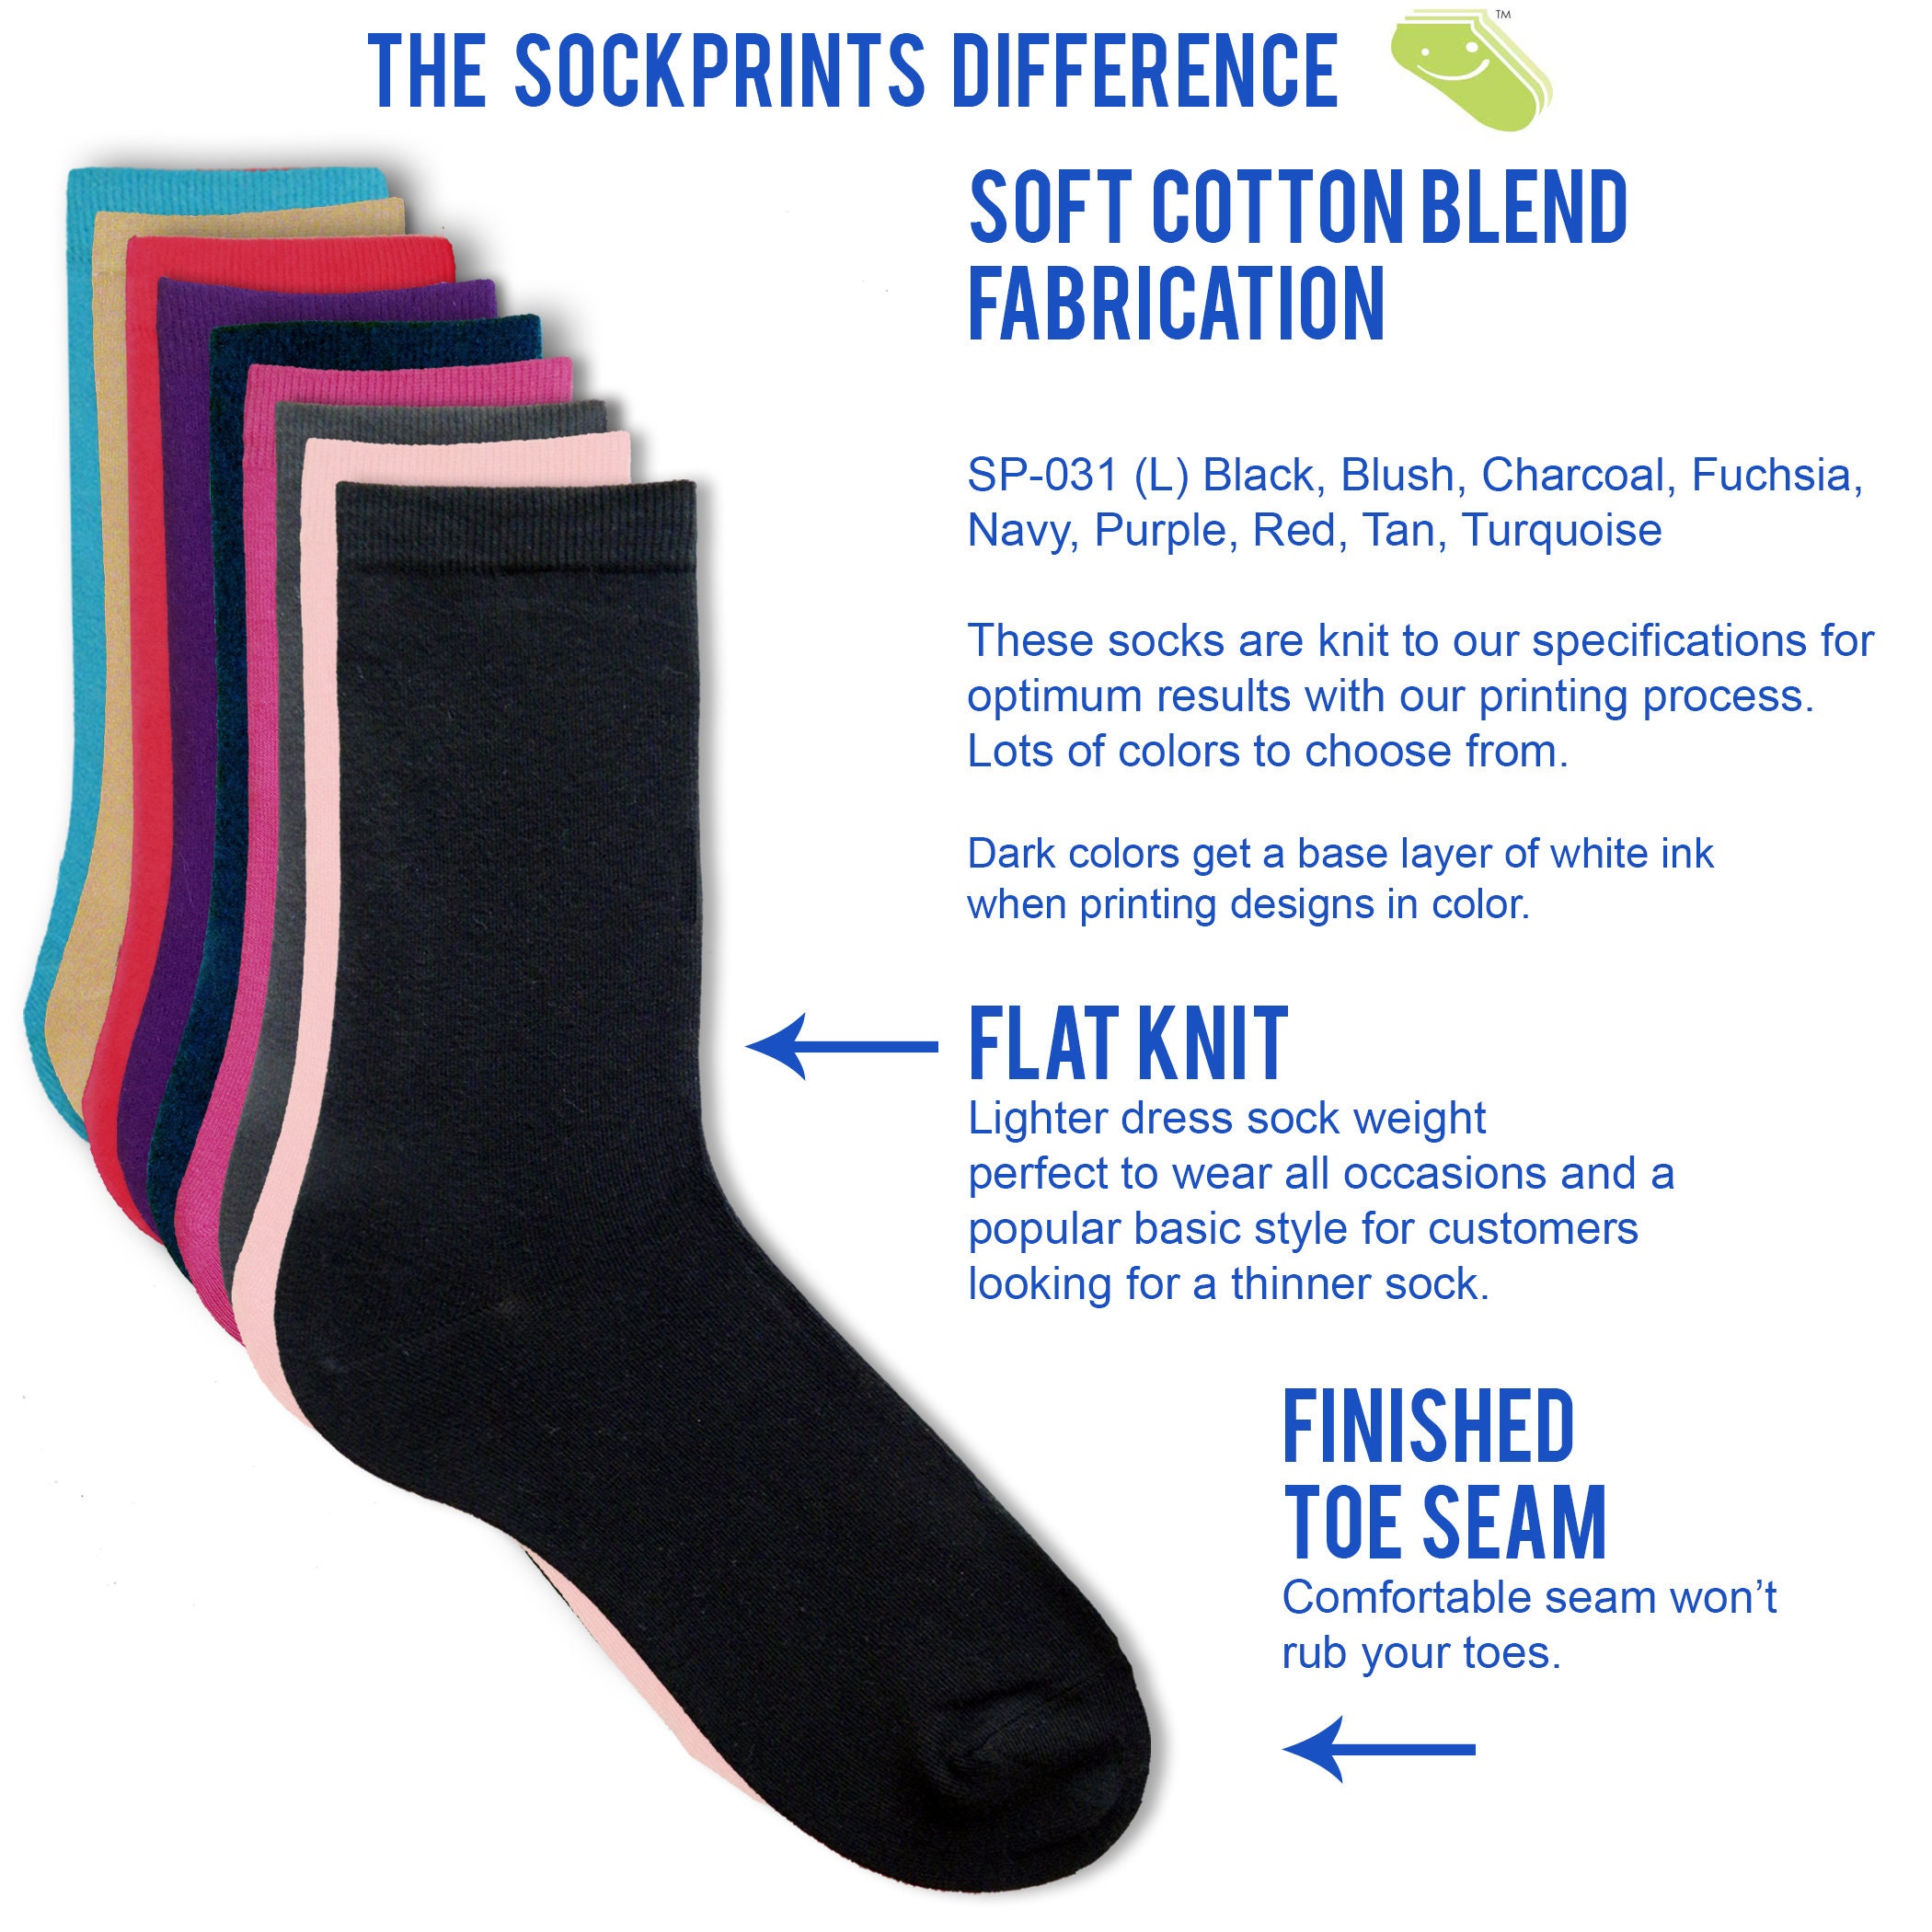 download custom socks